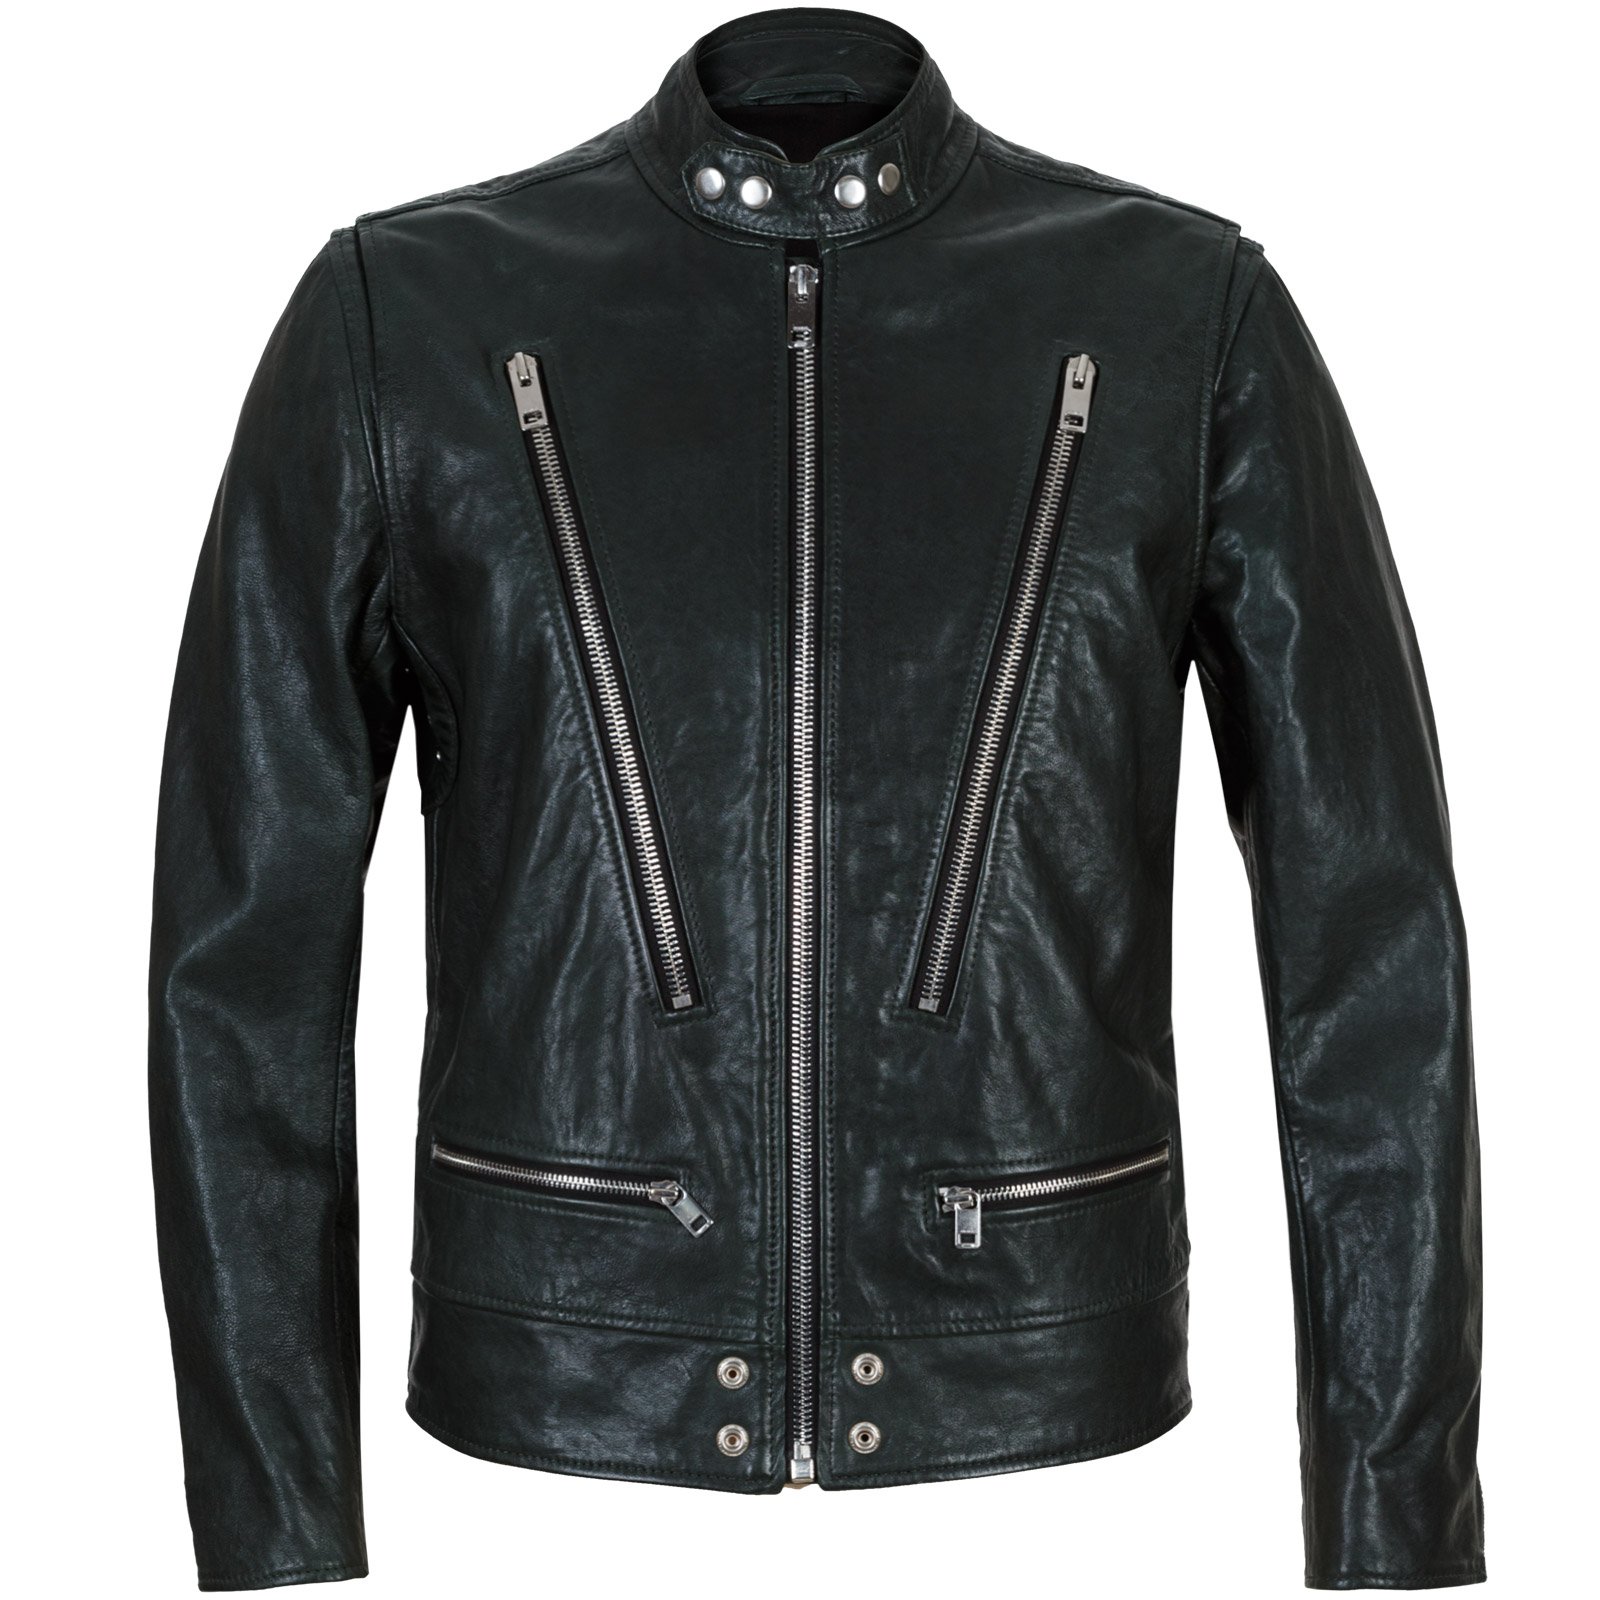 Diesel Vintage 80s 90s Leather Jacket XS/S | eBay